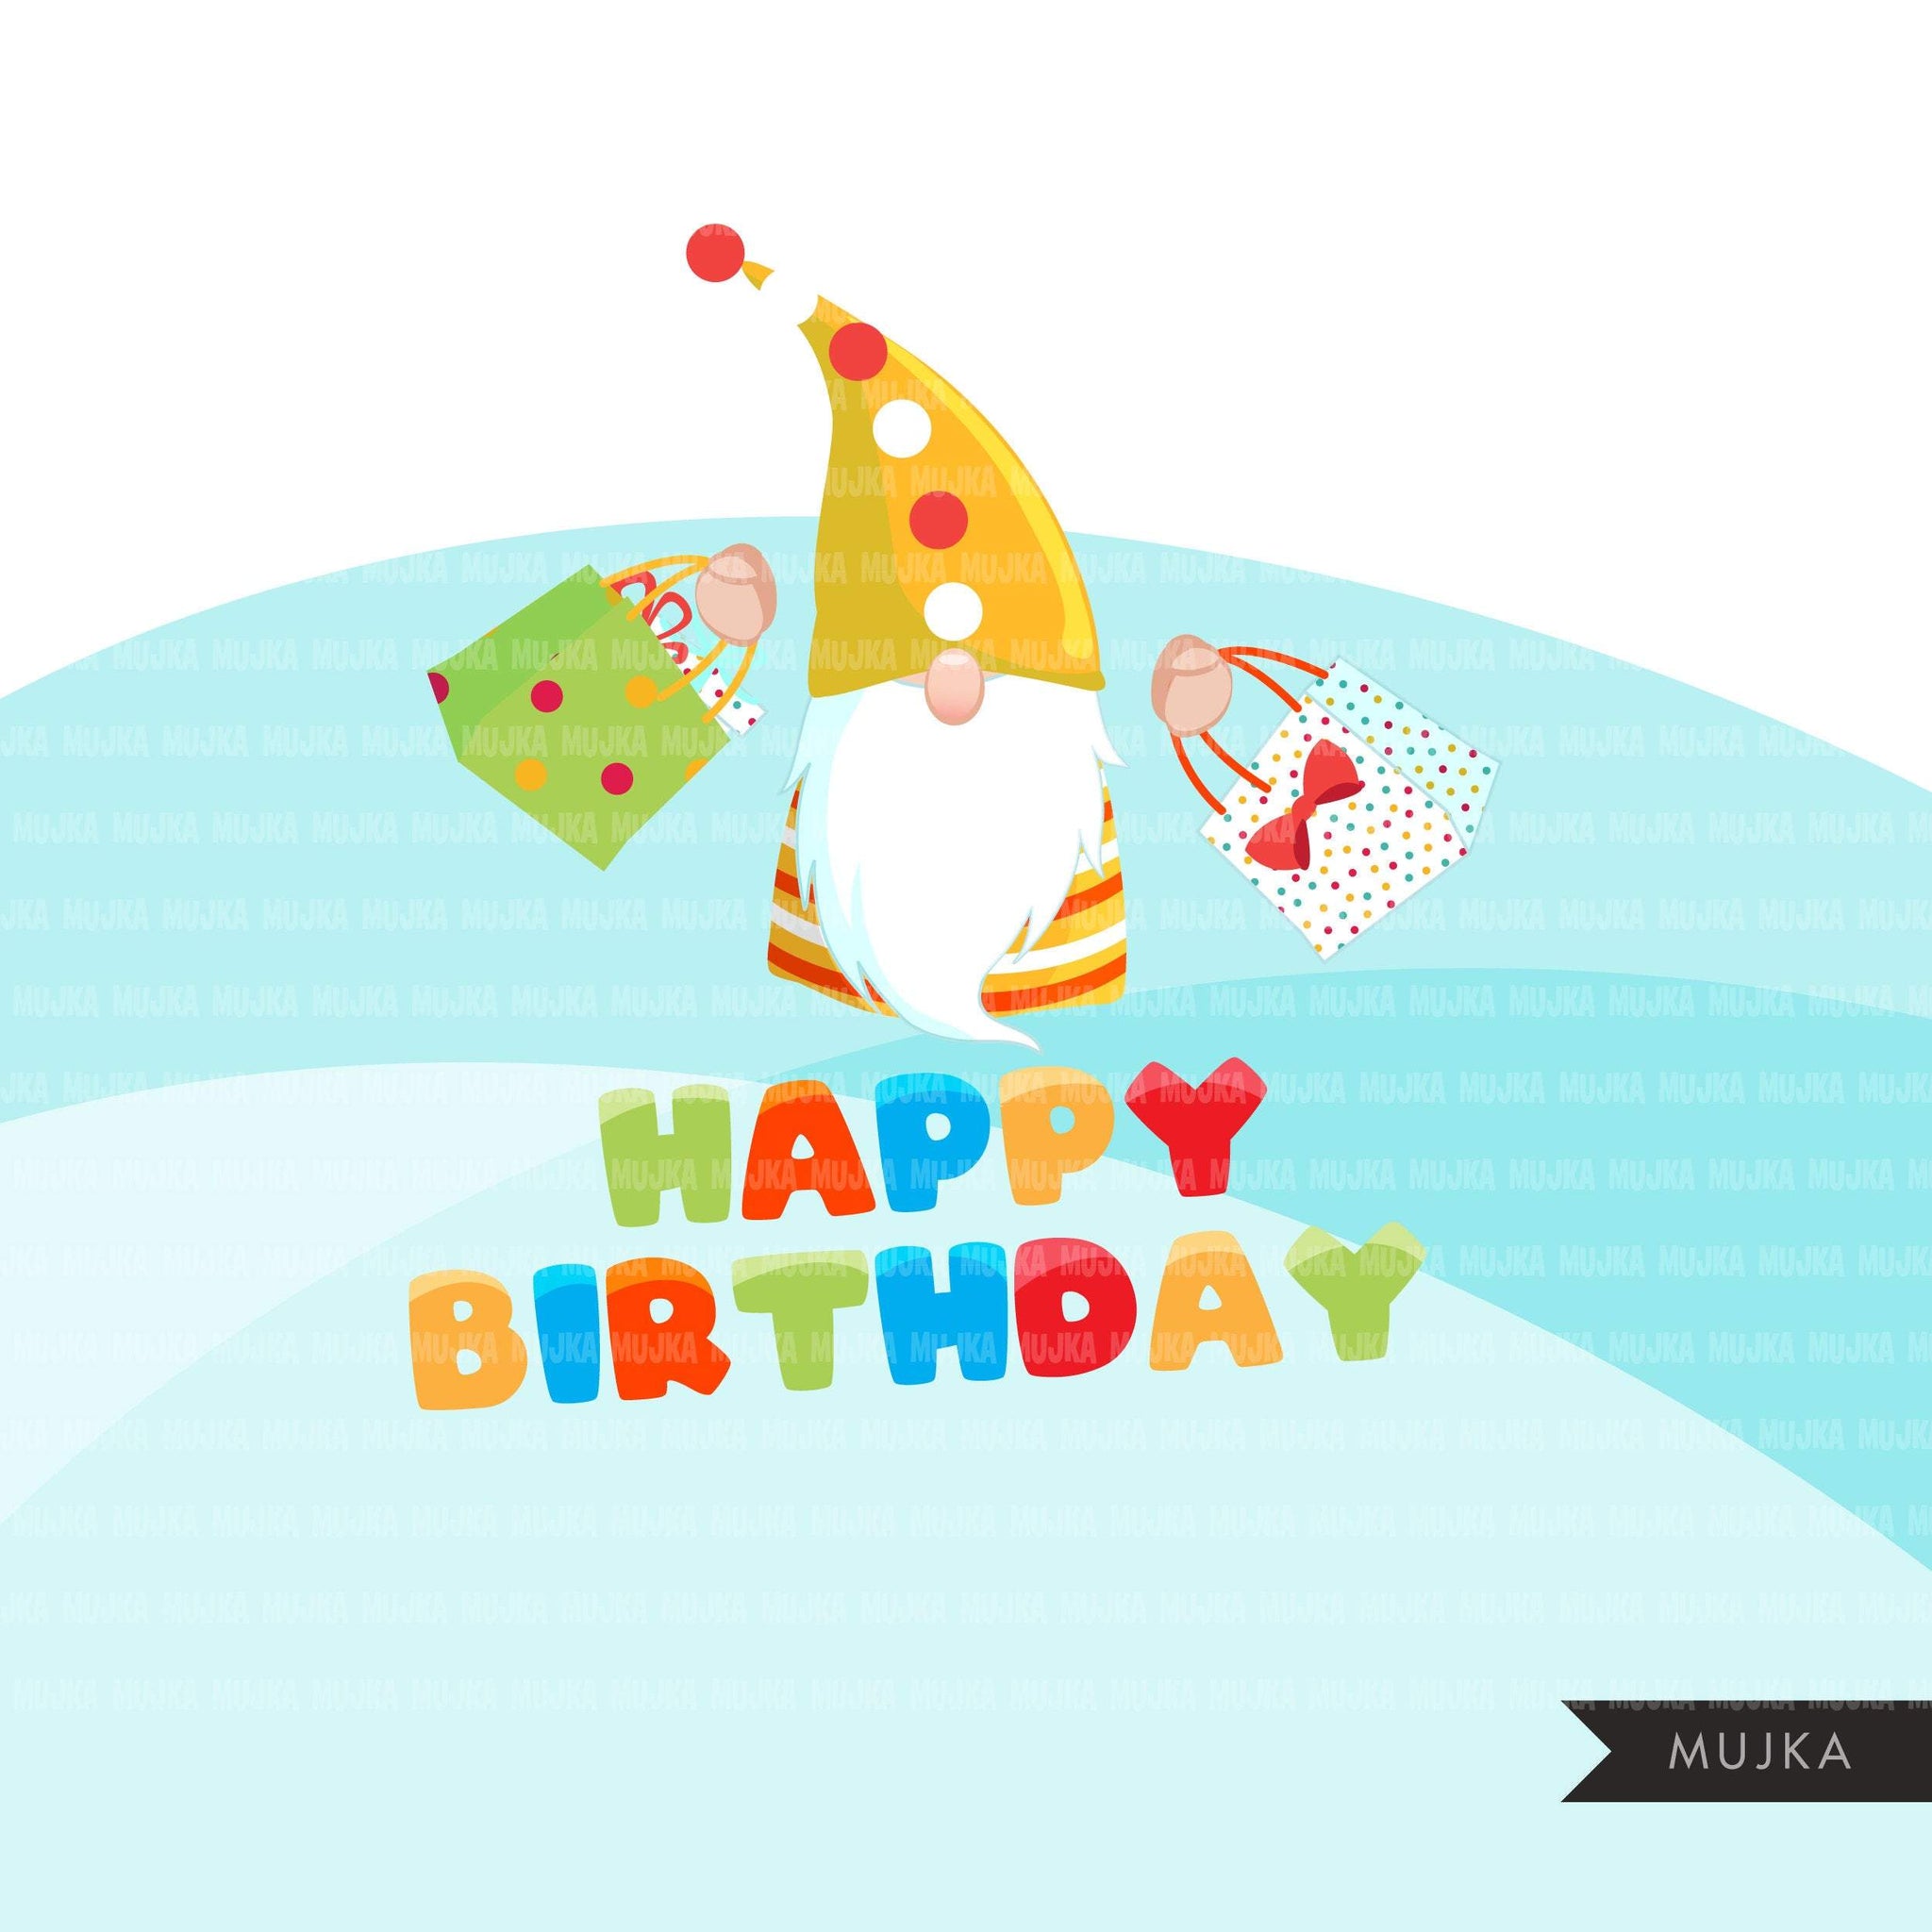 Download Birthday gnomes Clipart, birthday graphics, colorful party Gnome graph - MUJKA CLIPARTS